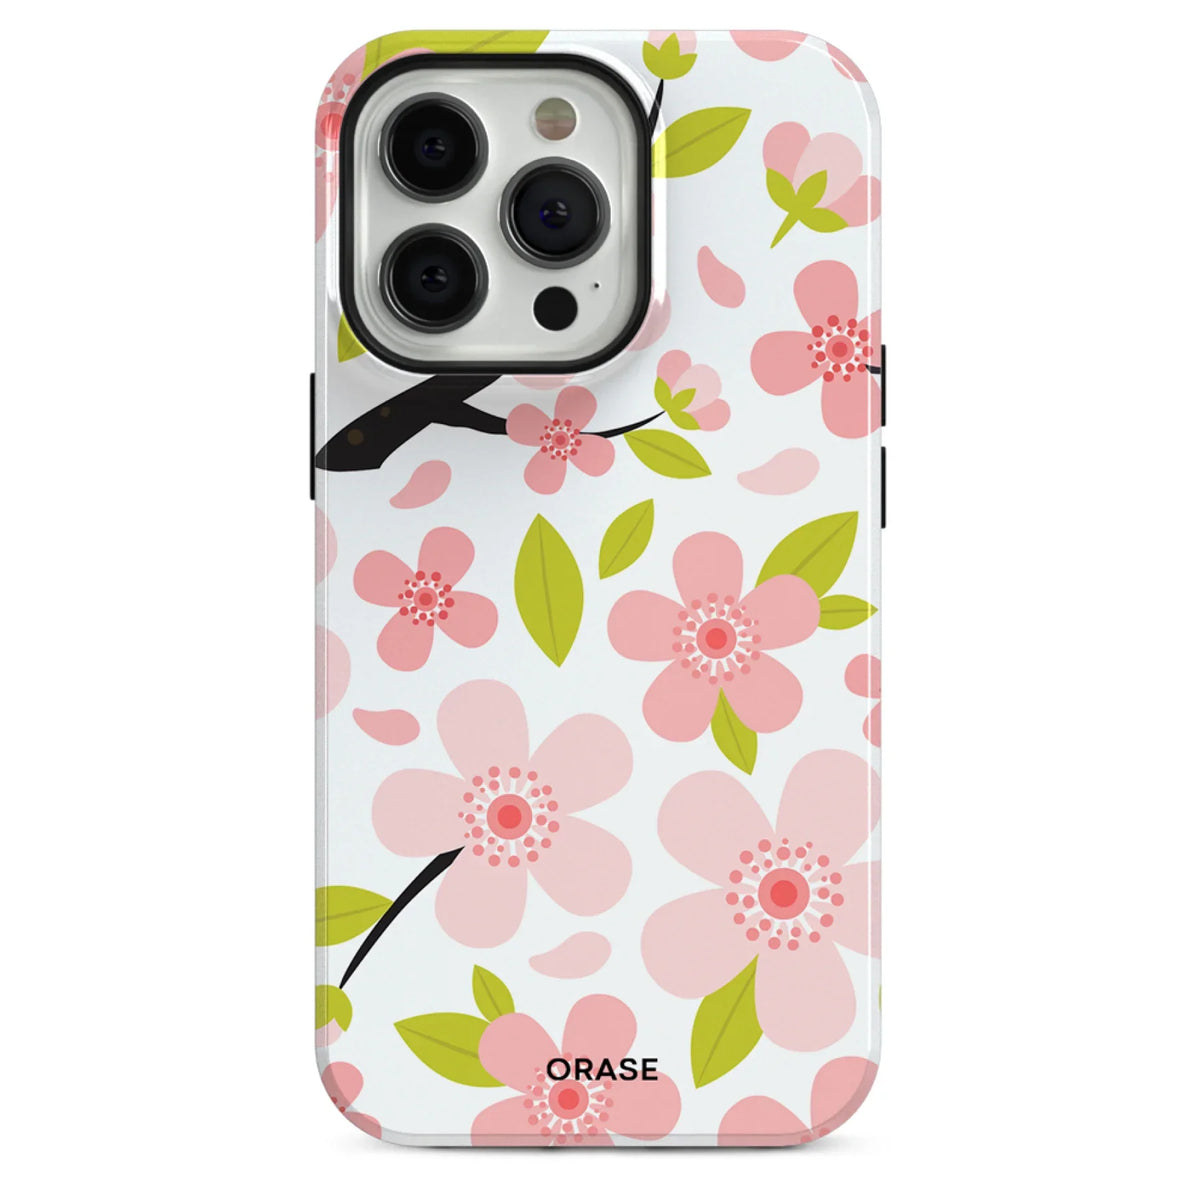 Peach Blossom iPhone Case - iPhone 11 Pro Max